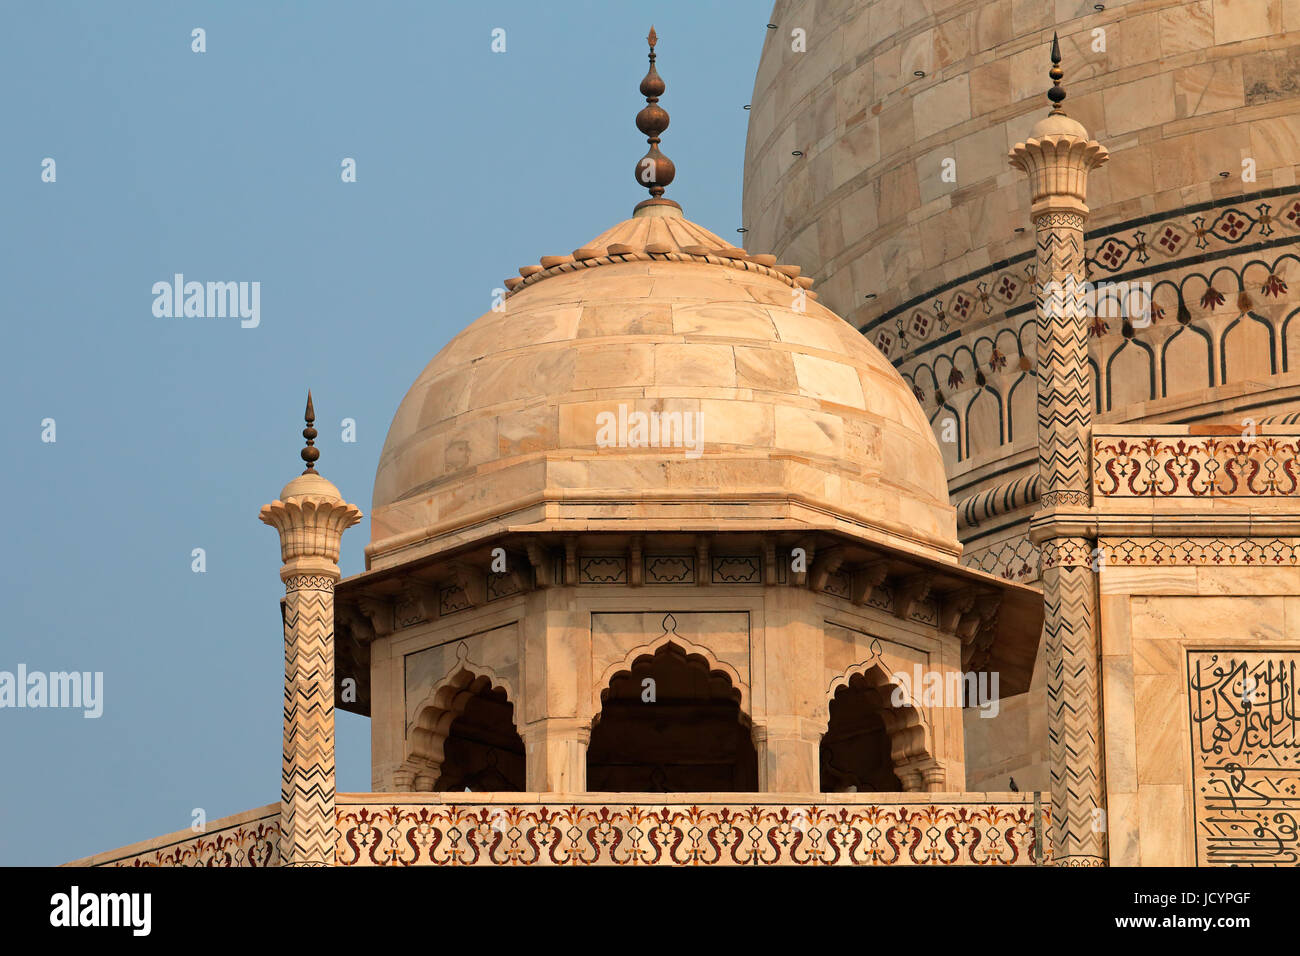 Architectural detail of the famous Taj Mahal, Agra, India Stock Photo